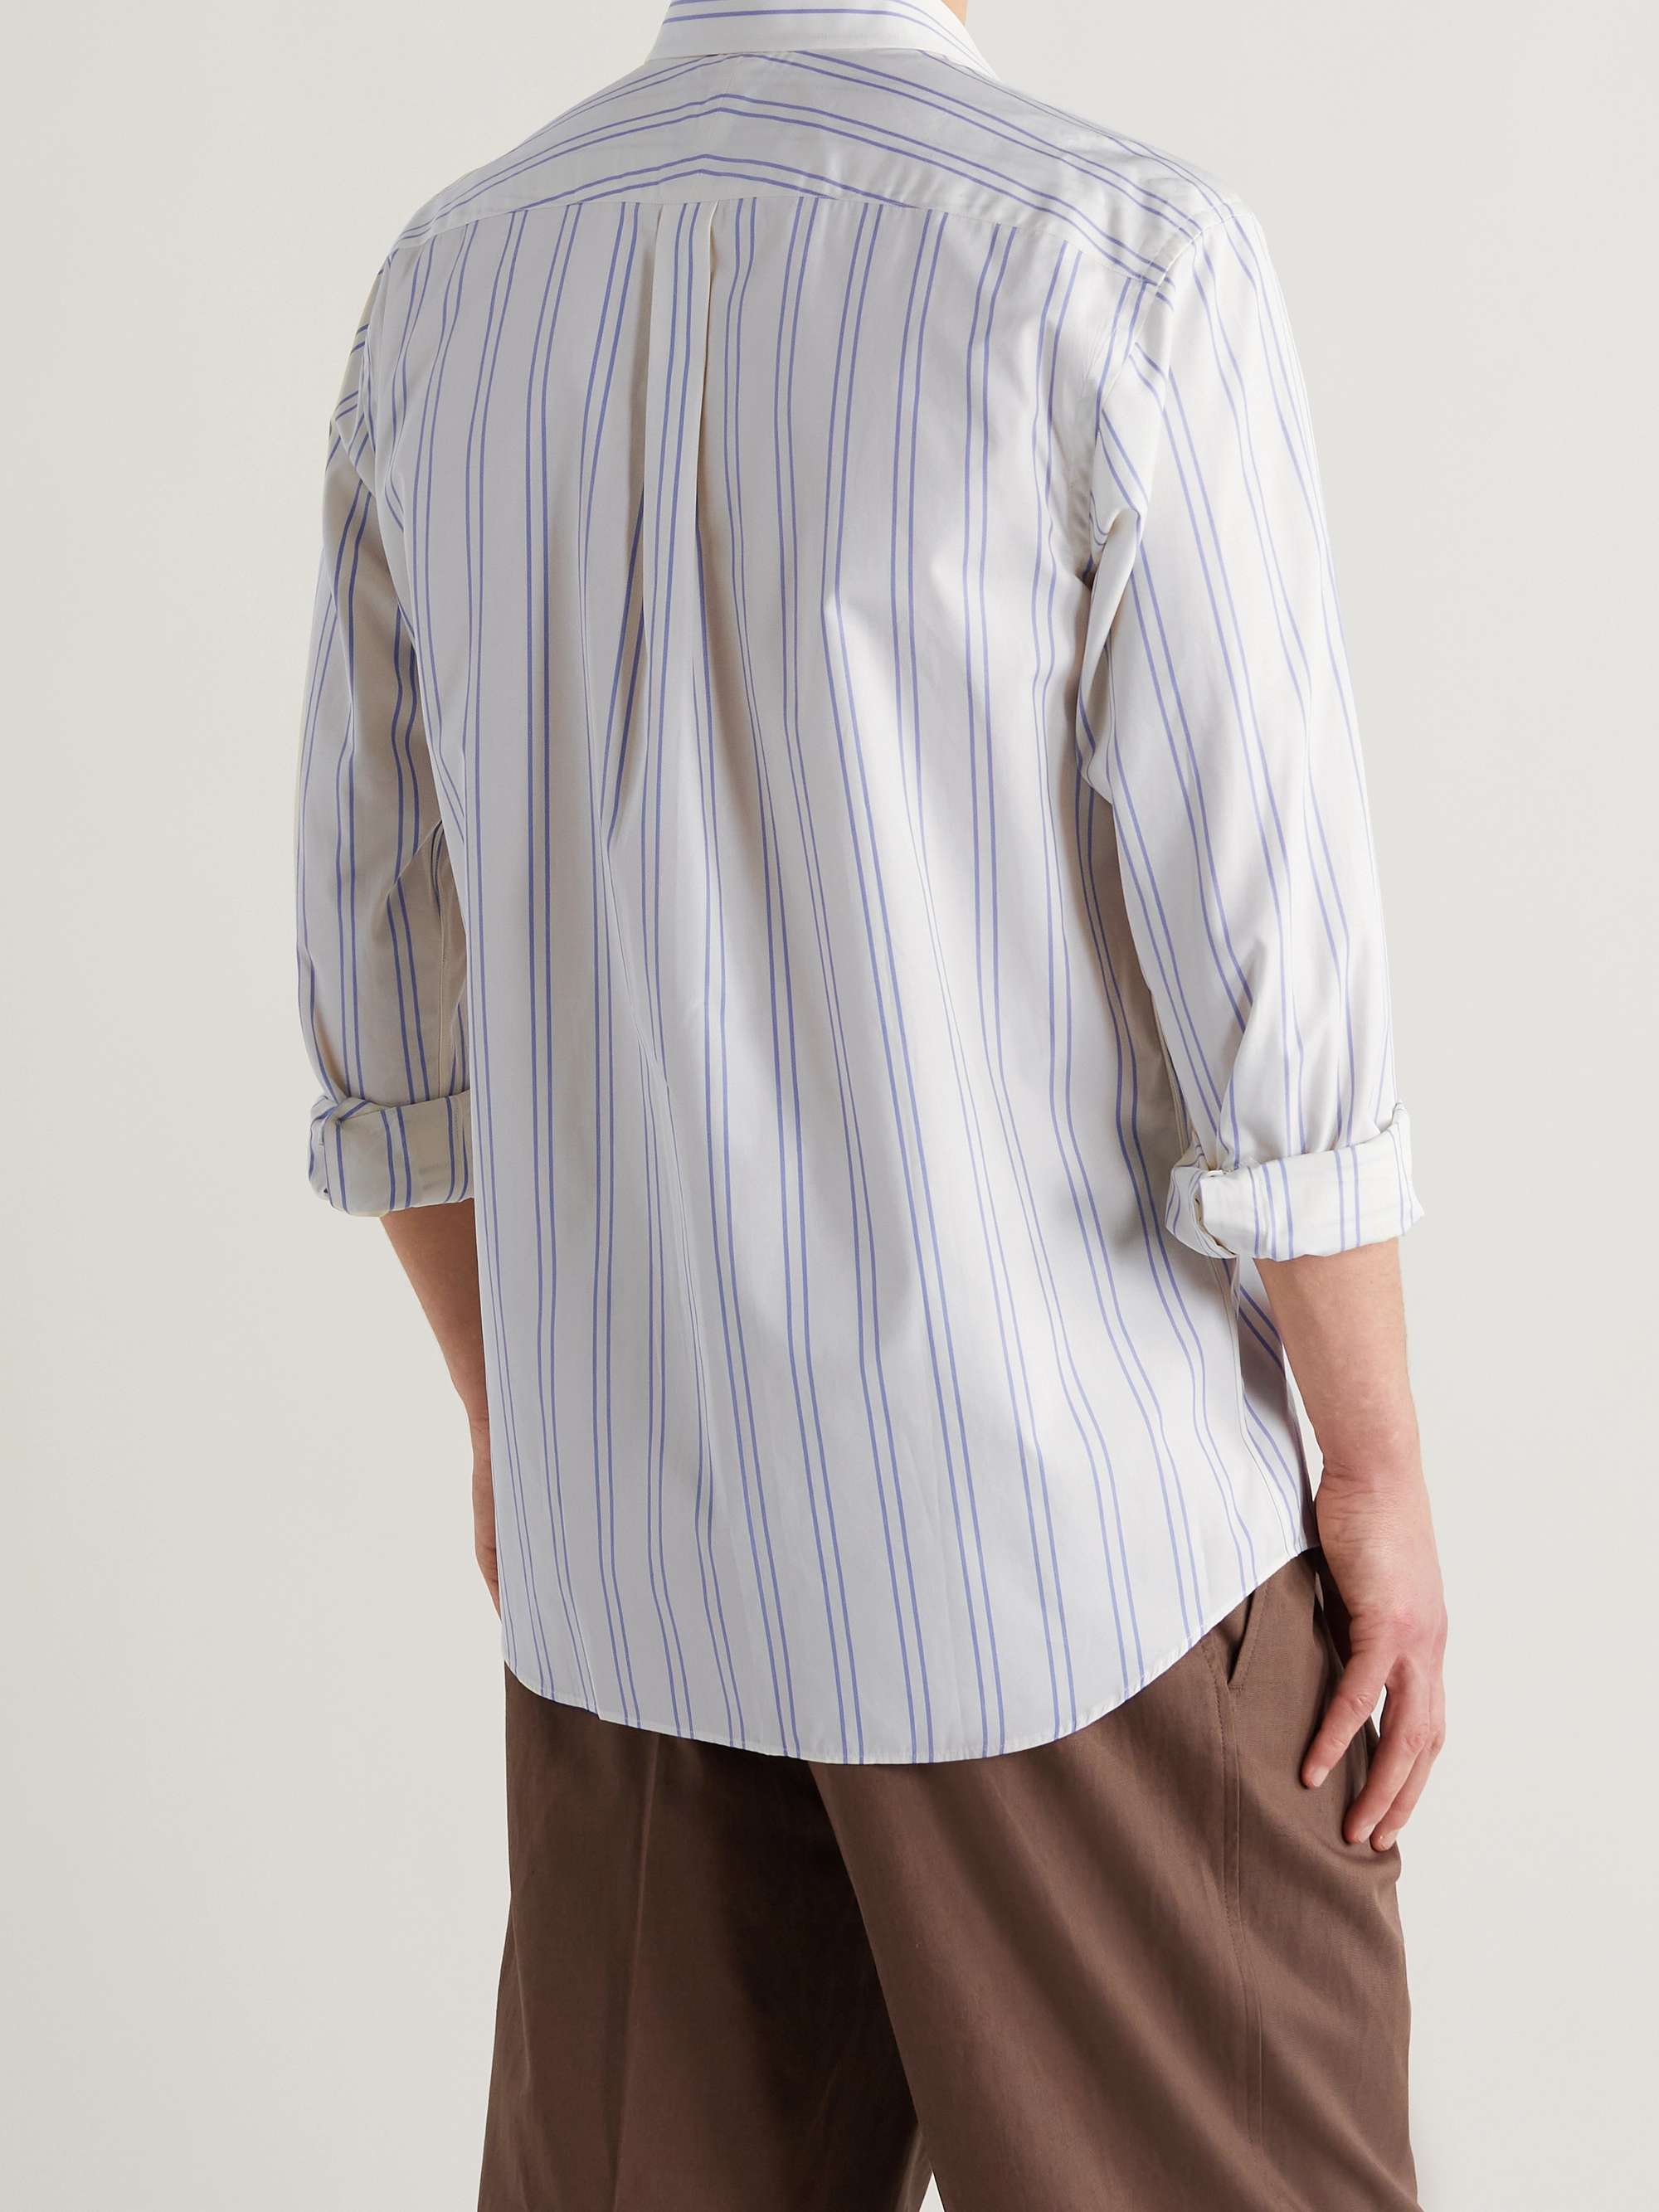 TURNBULL & ASSER Striped Cotton-Poplin Shirt